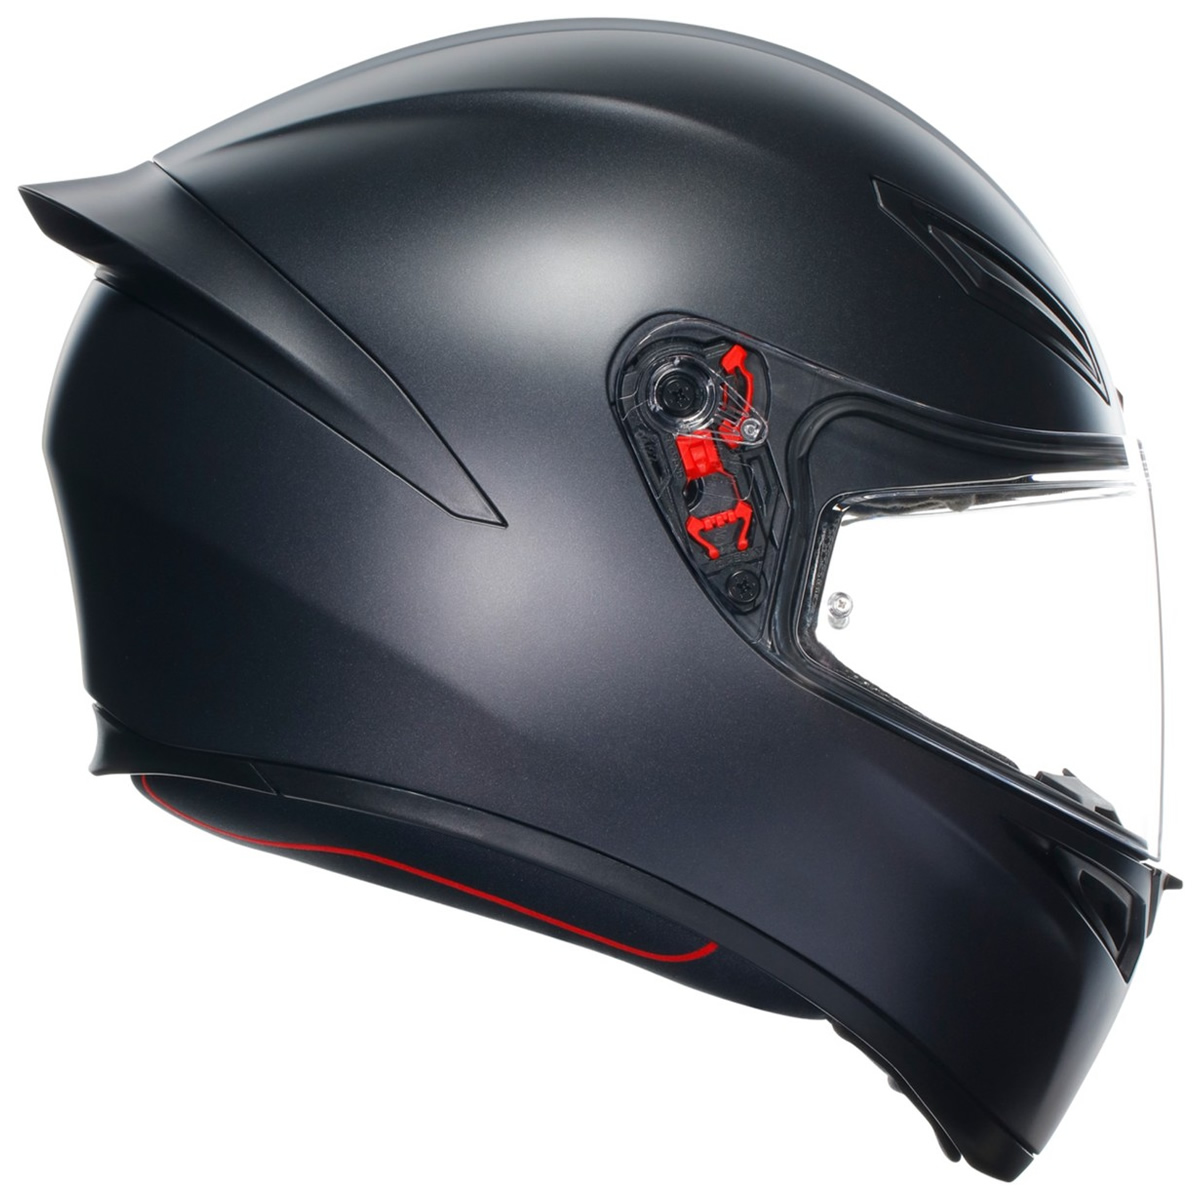 AGV K1 S Solid Helm, schwarz matt